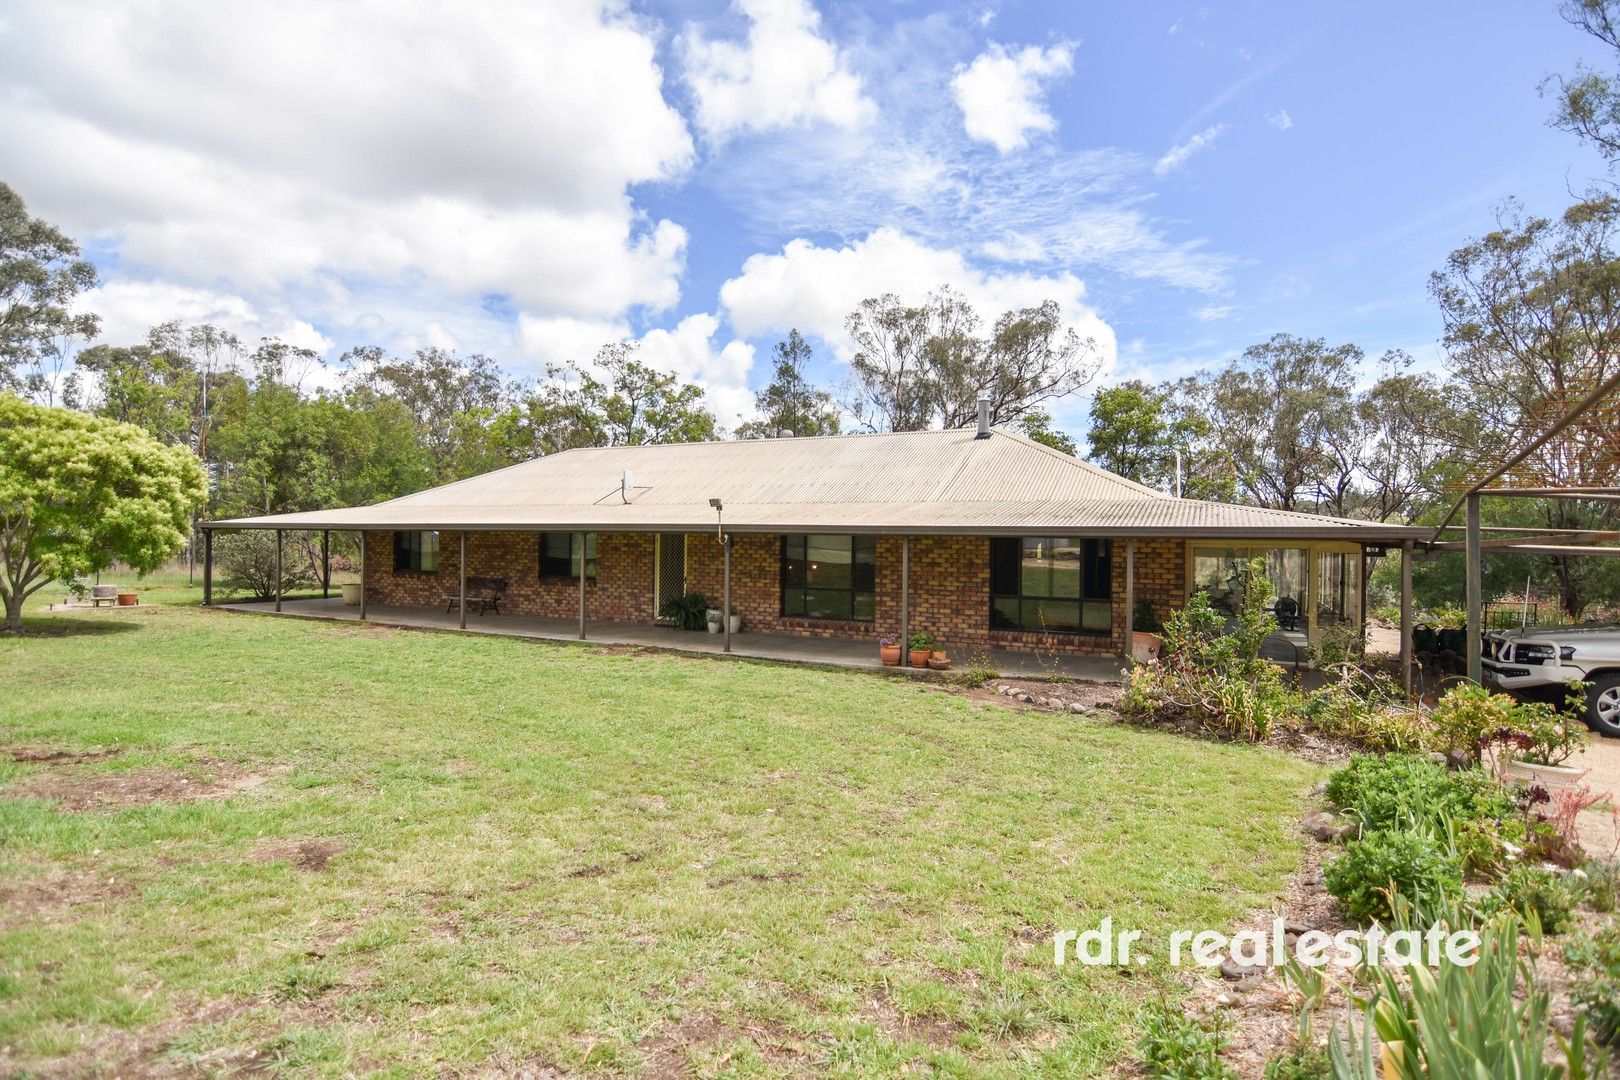 3 bedrooms Acreage / Semi-Rural in 83 Ditzells Drive INVERELL NSW, 2360